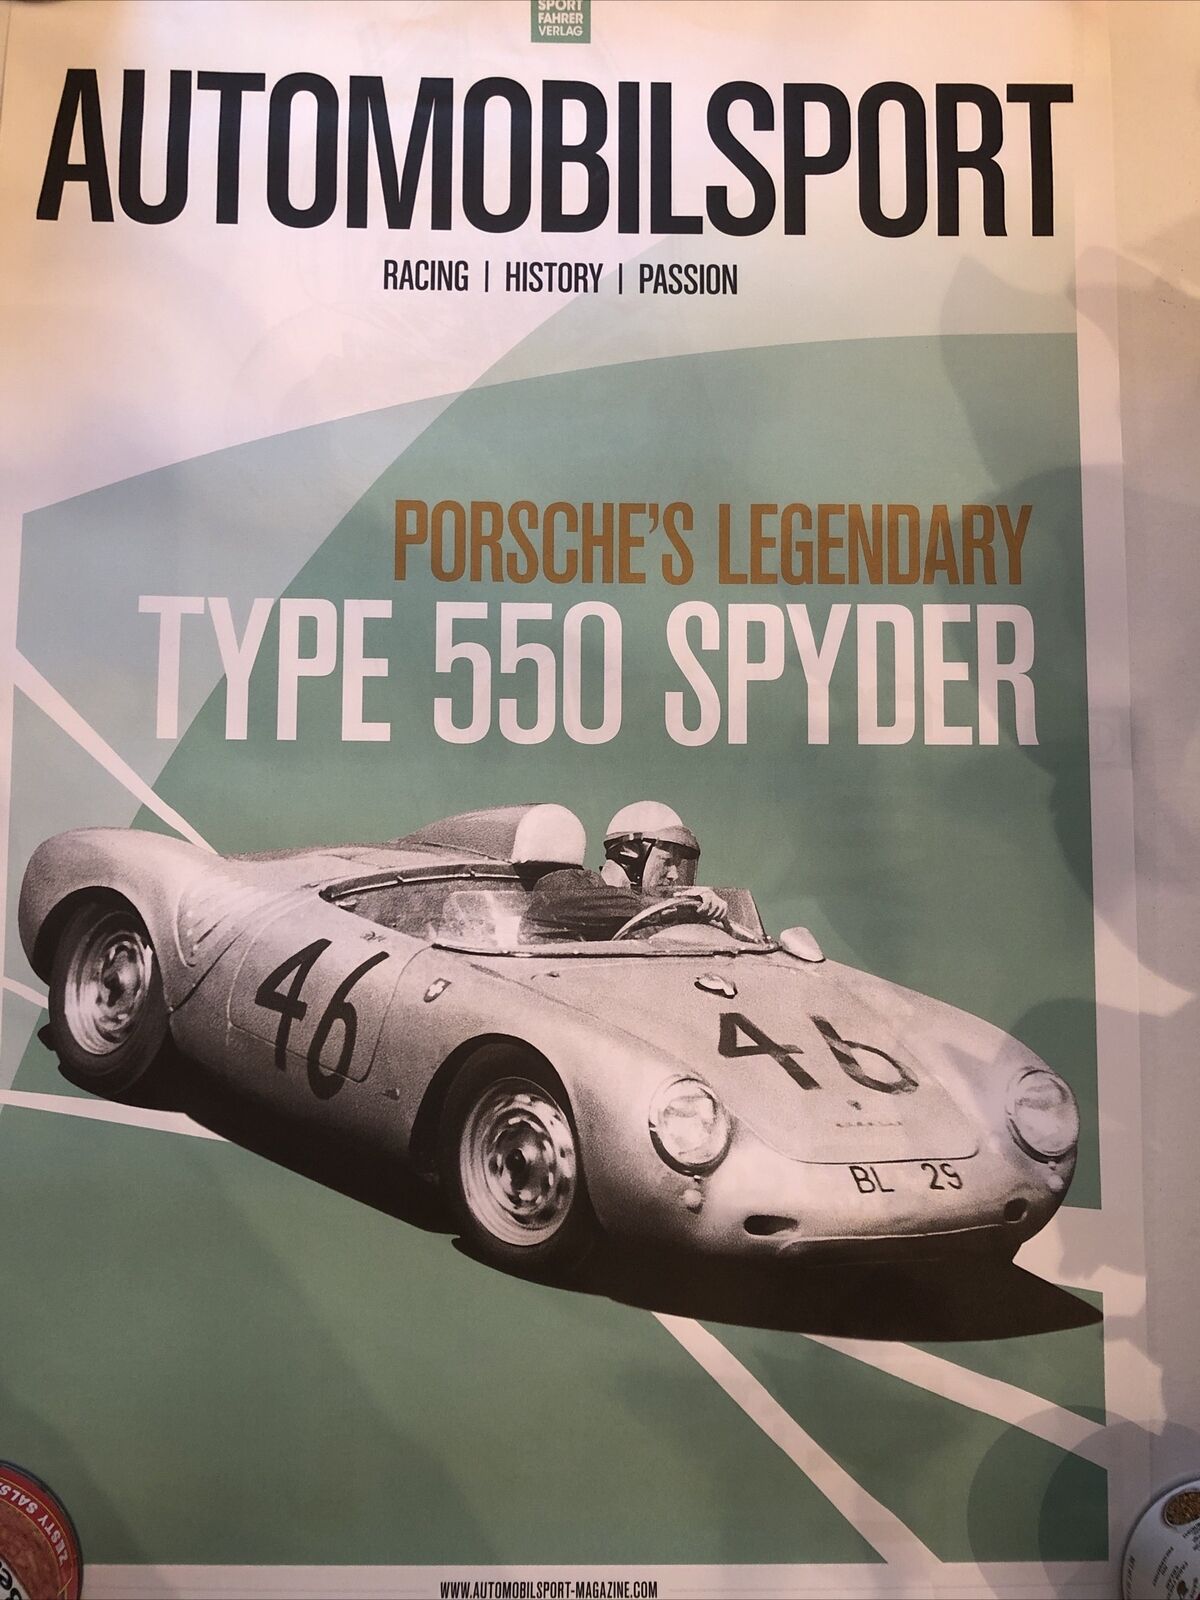 Porsche 550 Spyder Legendary Automobile Sport Poster Ltd #